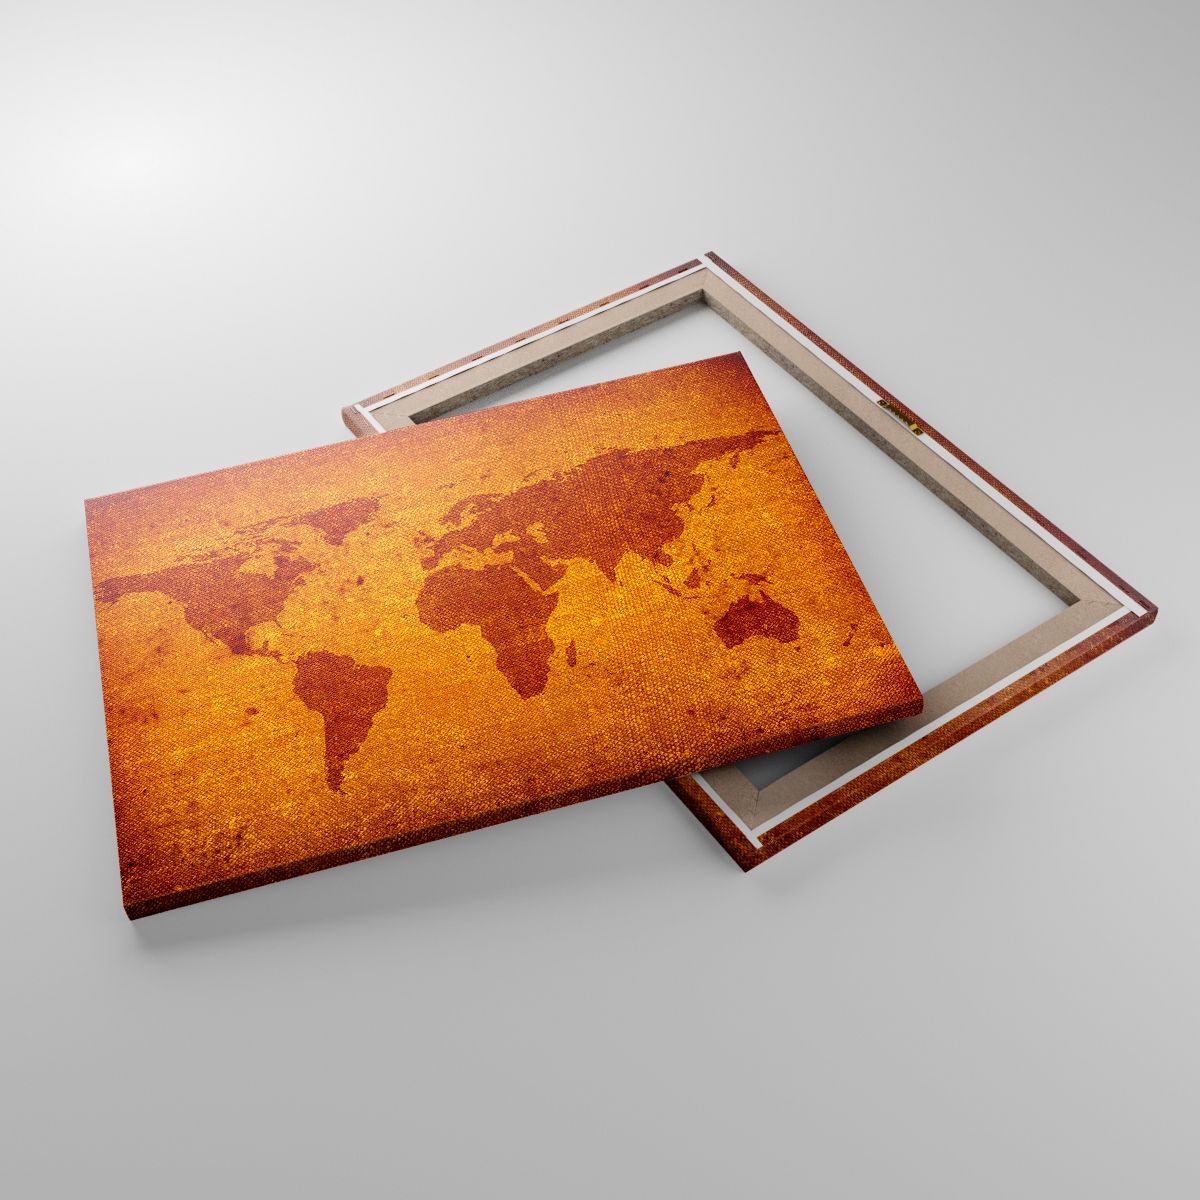 Leinwandbild Weltkarten, Leinwandbild Kontinente, Leinwandbild Reisen, Leinwandbild Geschichte, Leinwandbild Jahrgang